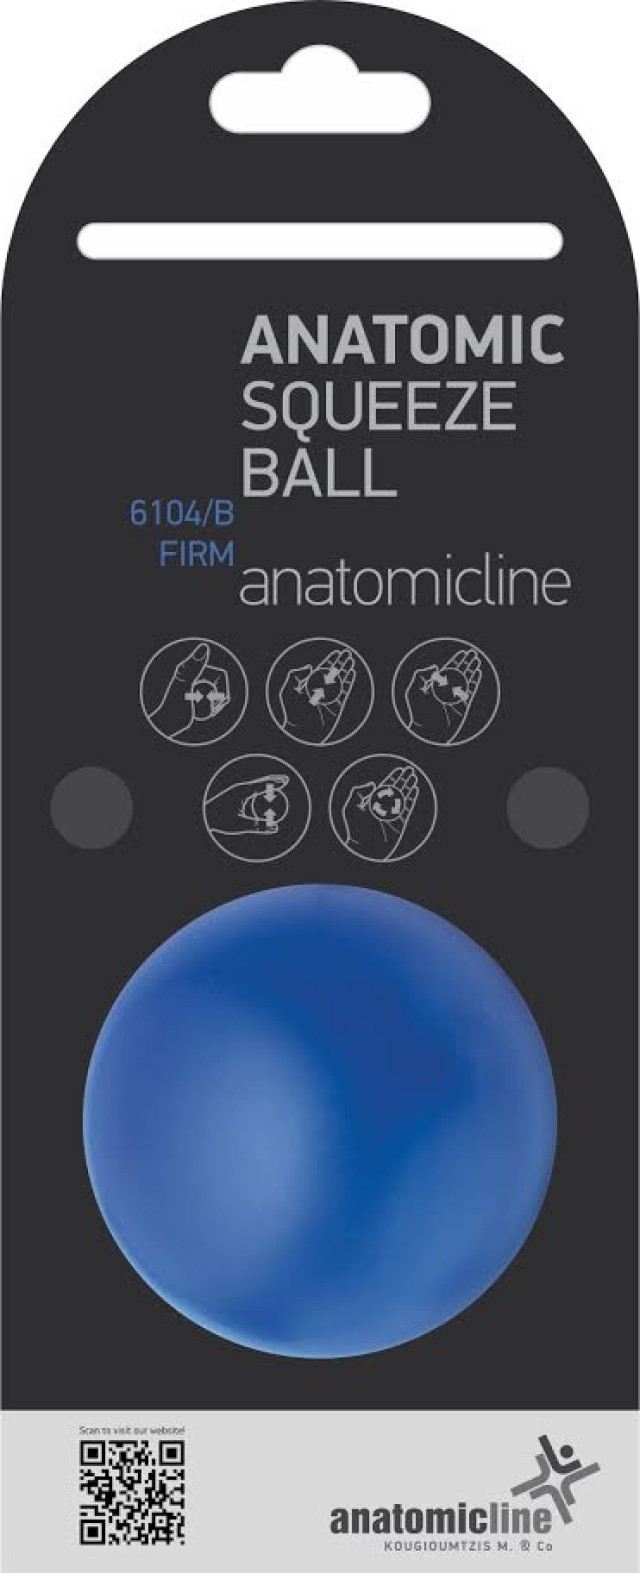 Anatomic Line Squeeze Ball Firm Μπαλάκι Ασκήσεως Χειρός Σκληρό [6104/B] Χρώμα:Μπλέ 1 Τεμάχιο